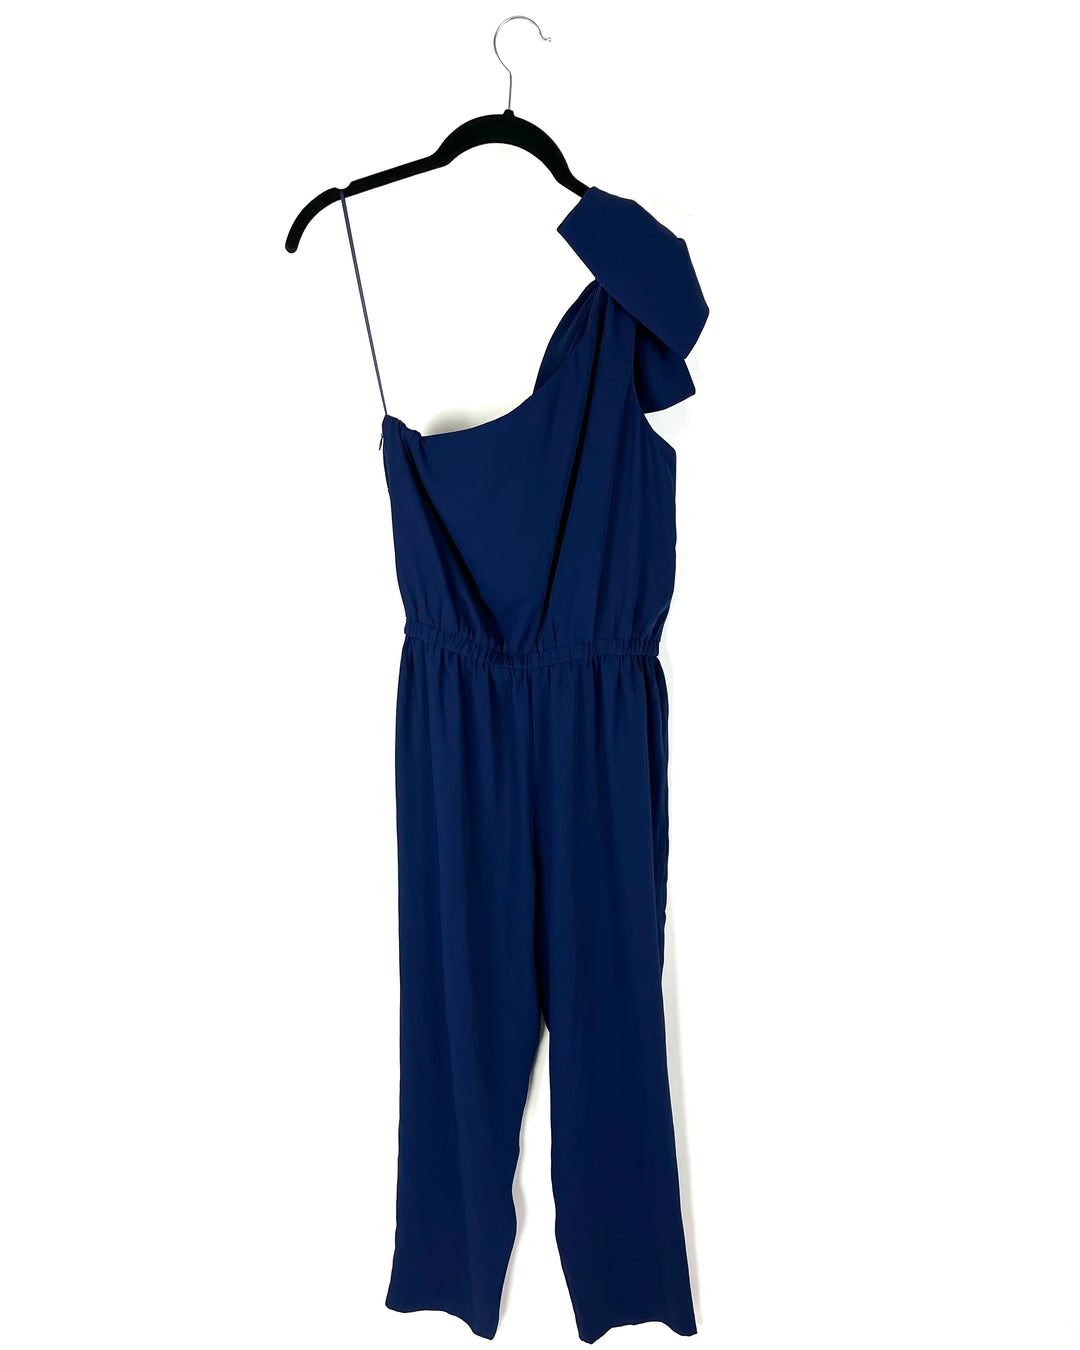 Navy blue One shoulder Jumpsuit - Size 4/6